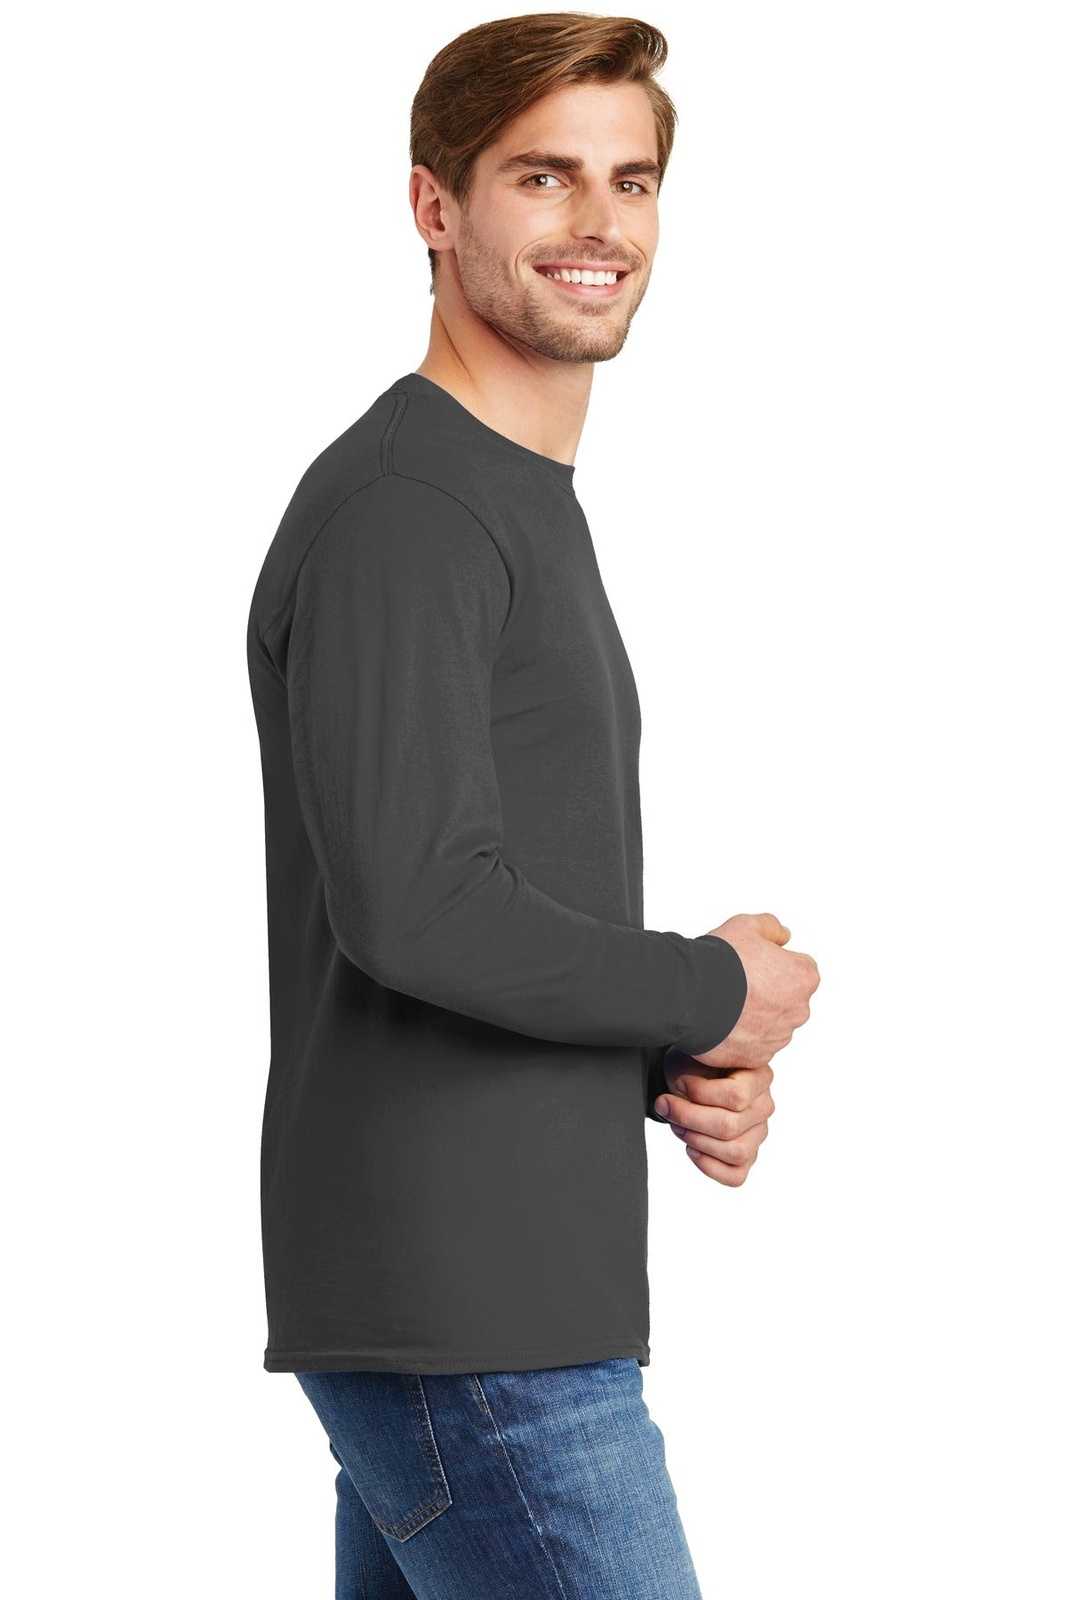 Hanes 5586 Tagless 100% Cotton Long Sleeve T-Shirt - Smoke Gray - HIT a Double